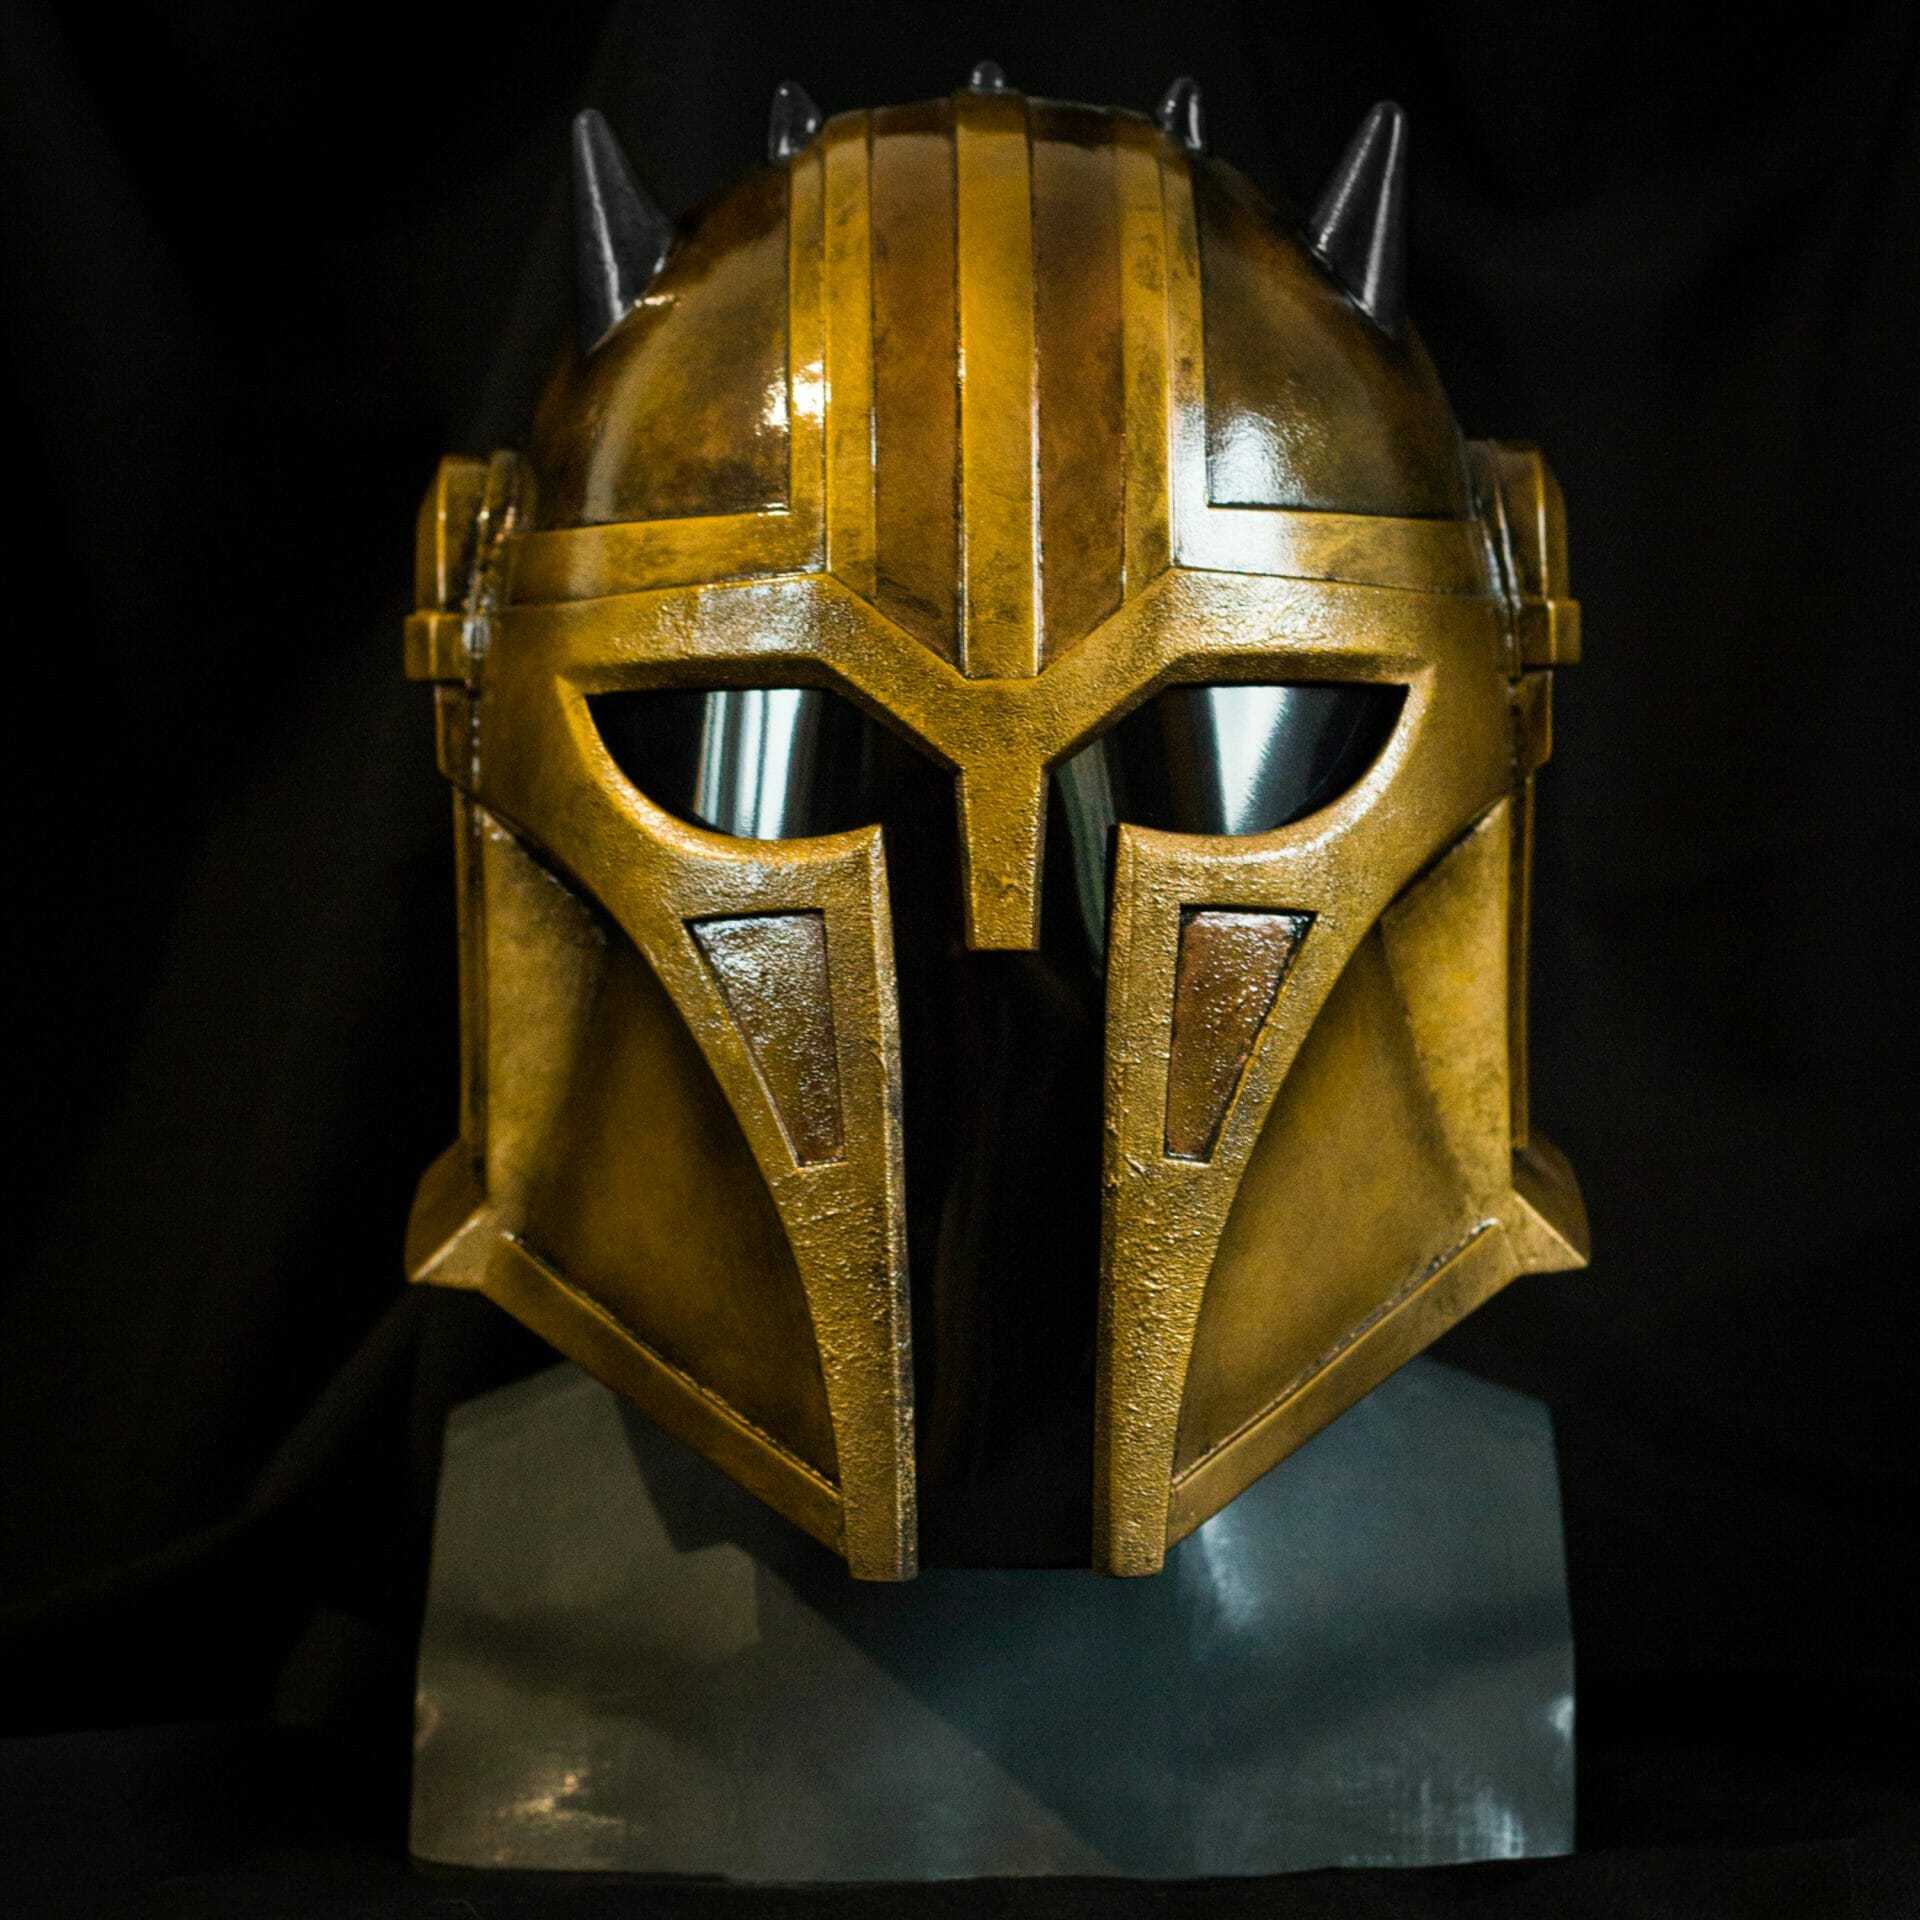 Mandalorian Armorer helmet by “Mandalorian” Series